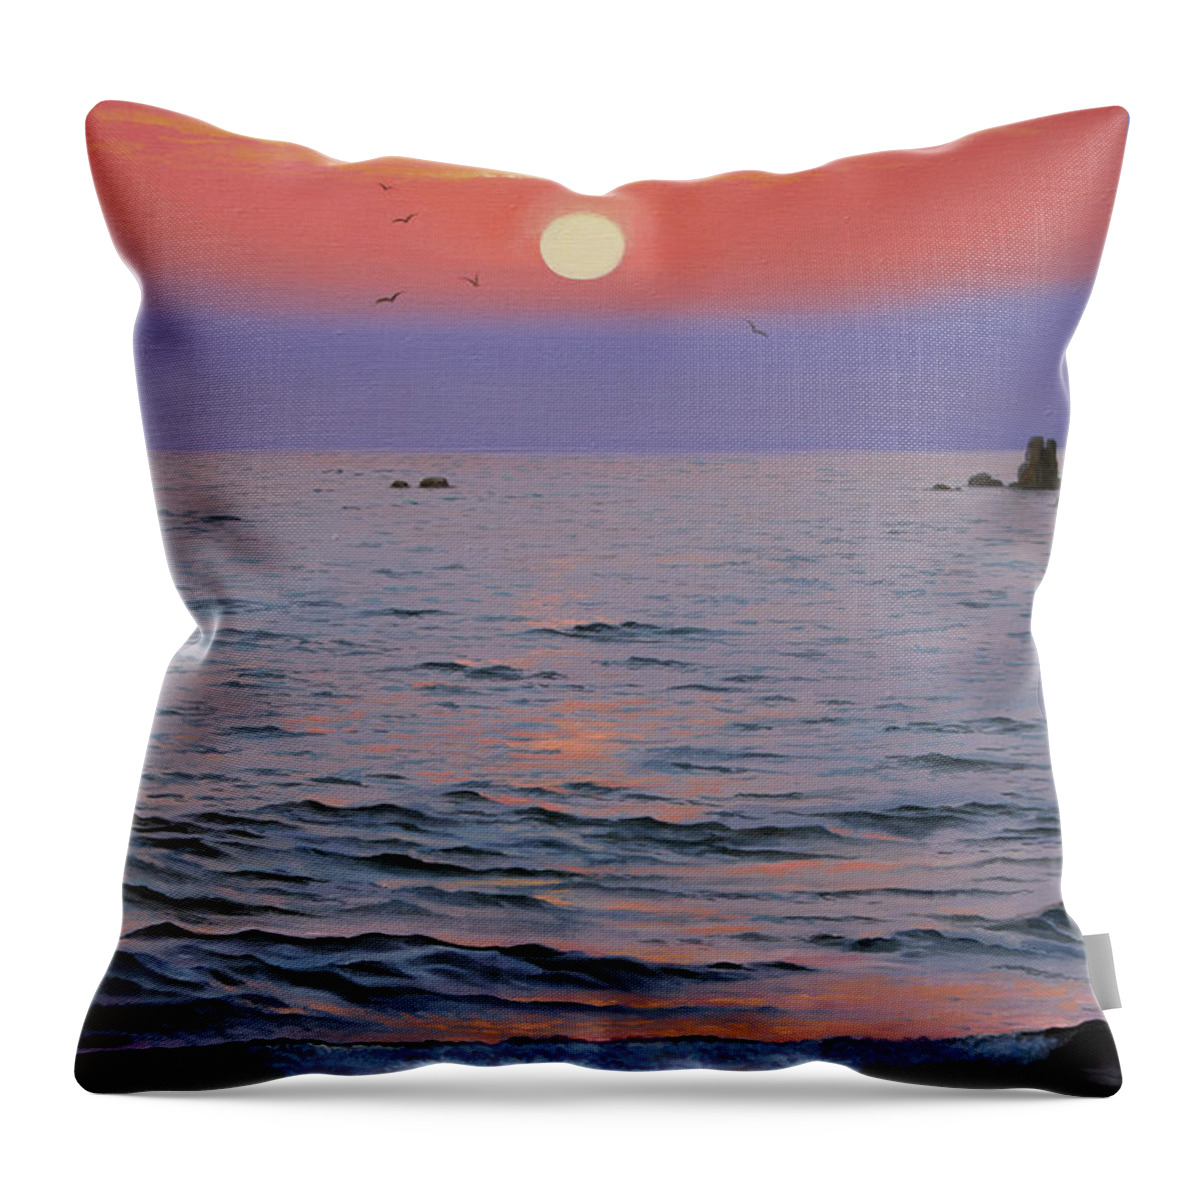 Ocean Throw Pillow featuring the painting Indian ocean by Vrindavan Das